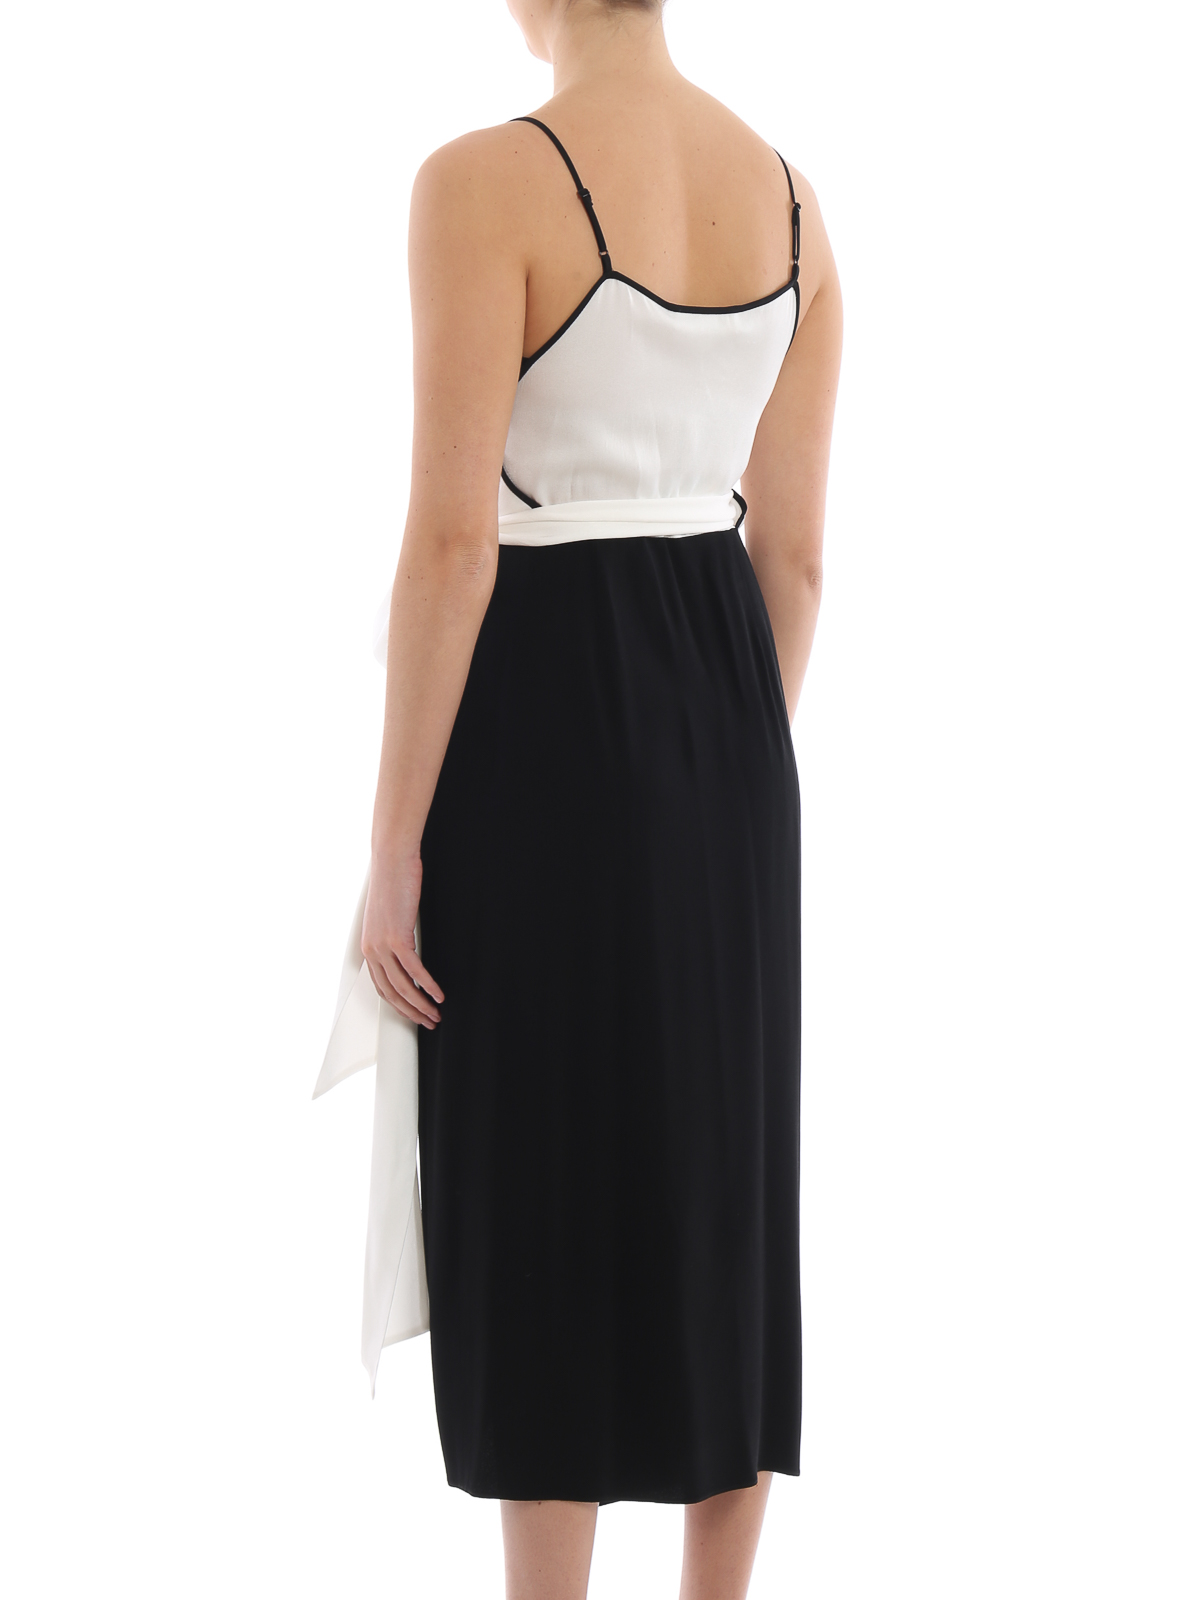 Cocktail Diane Von - Avila black and white crepe wrap dress 12352DVFIVBK